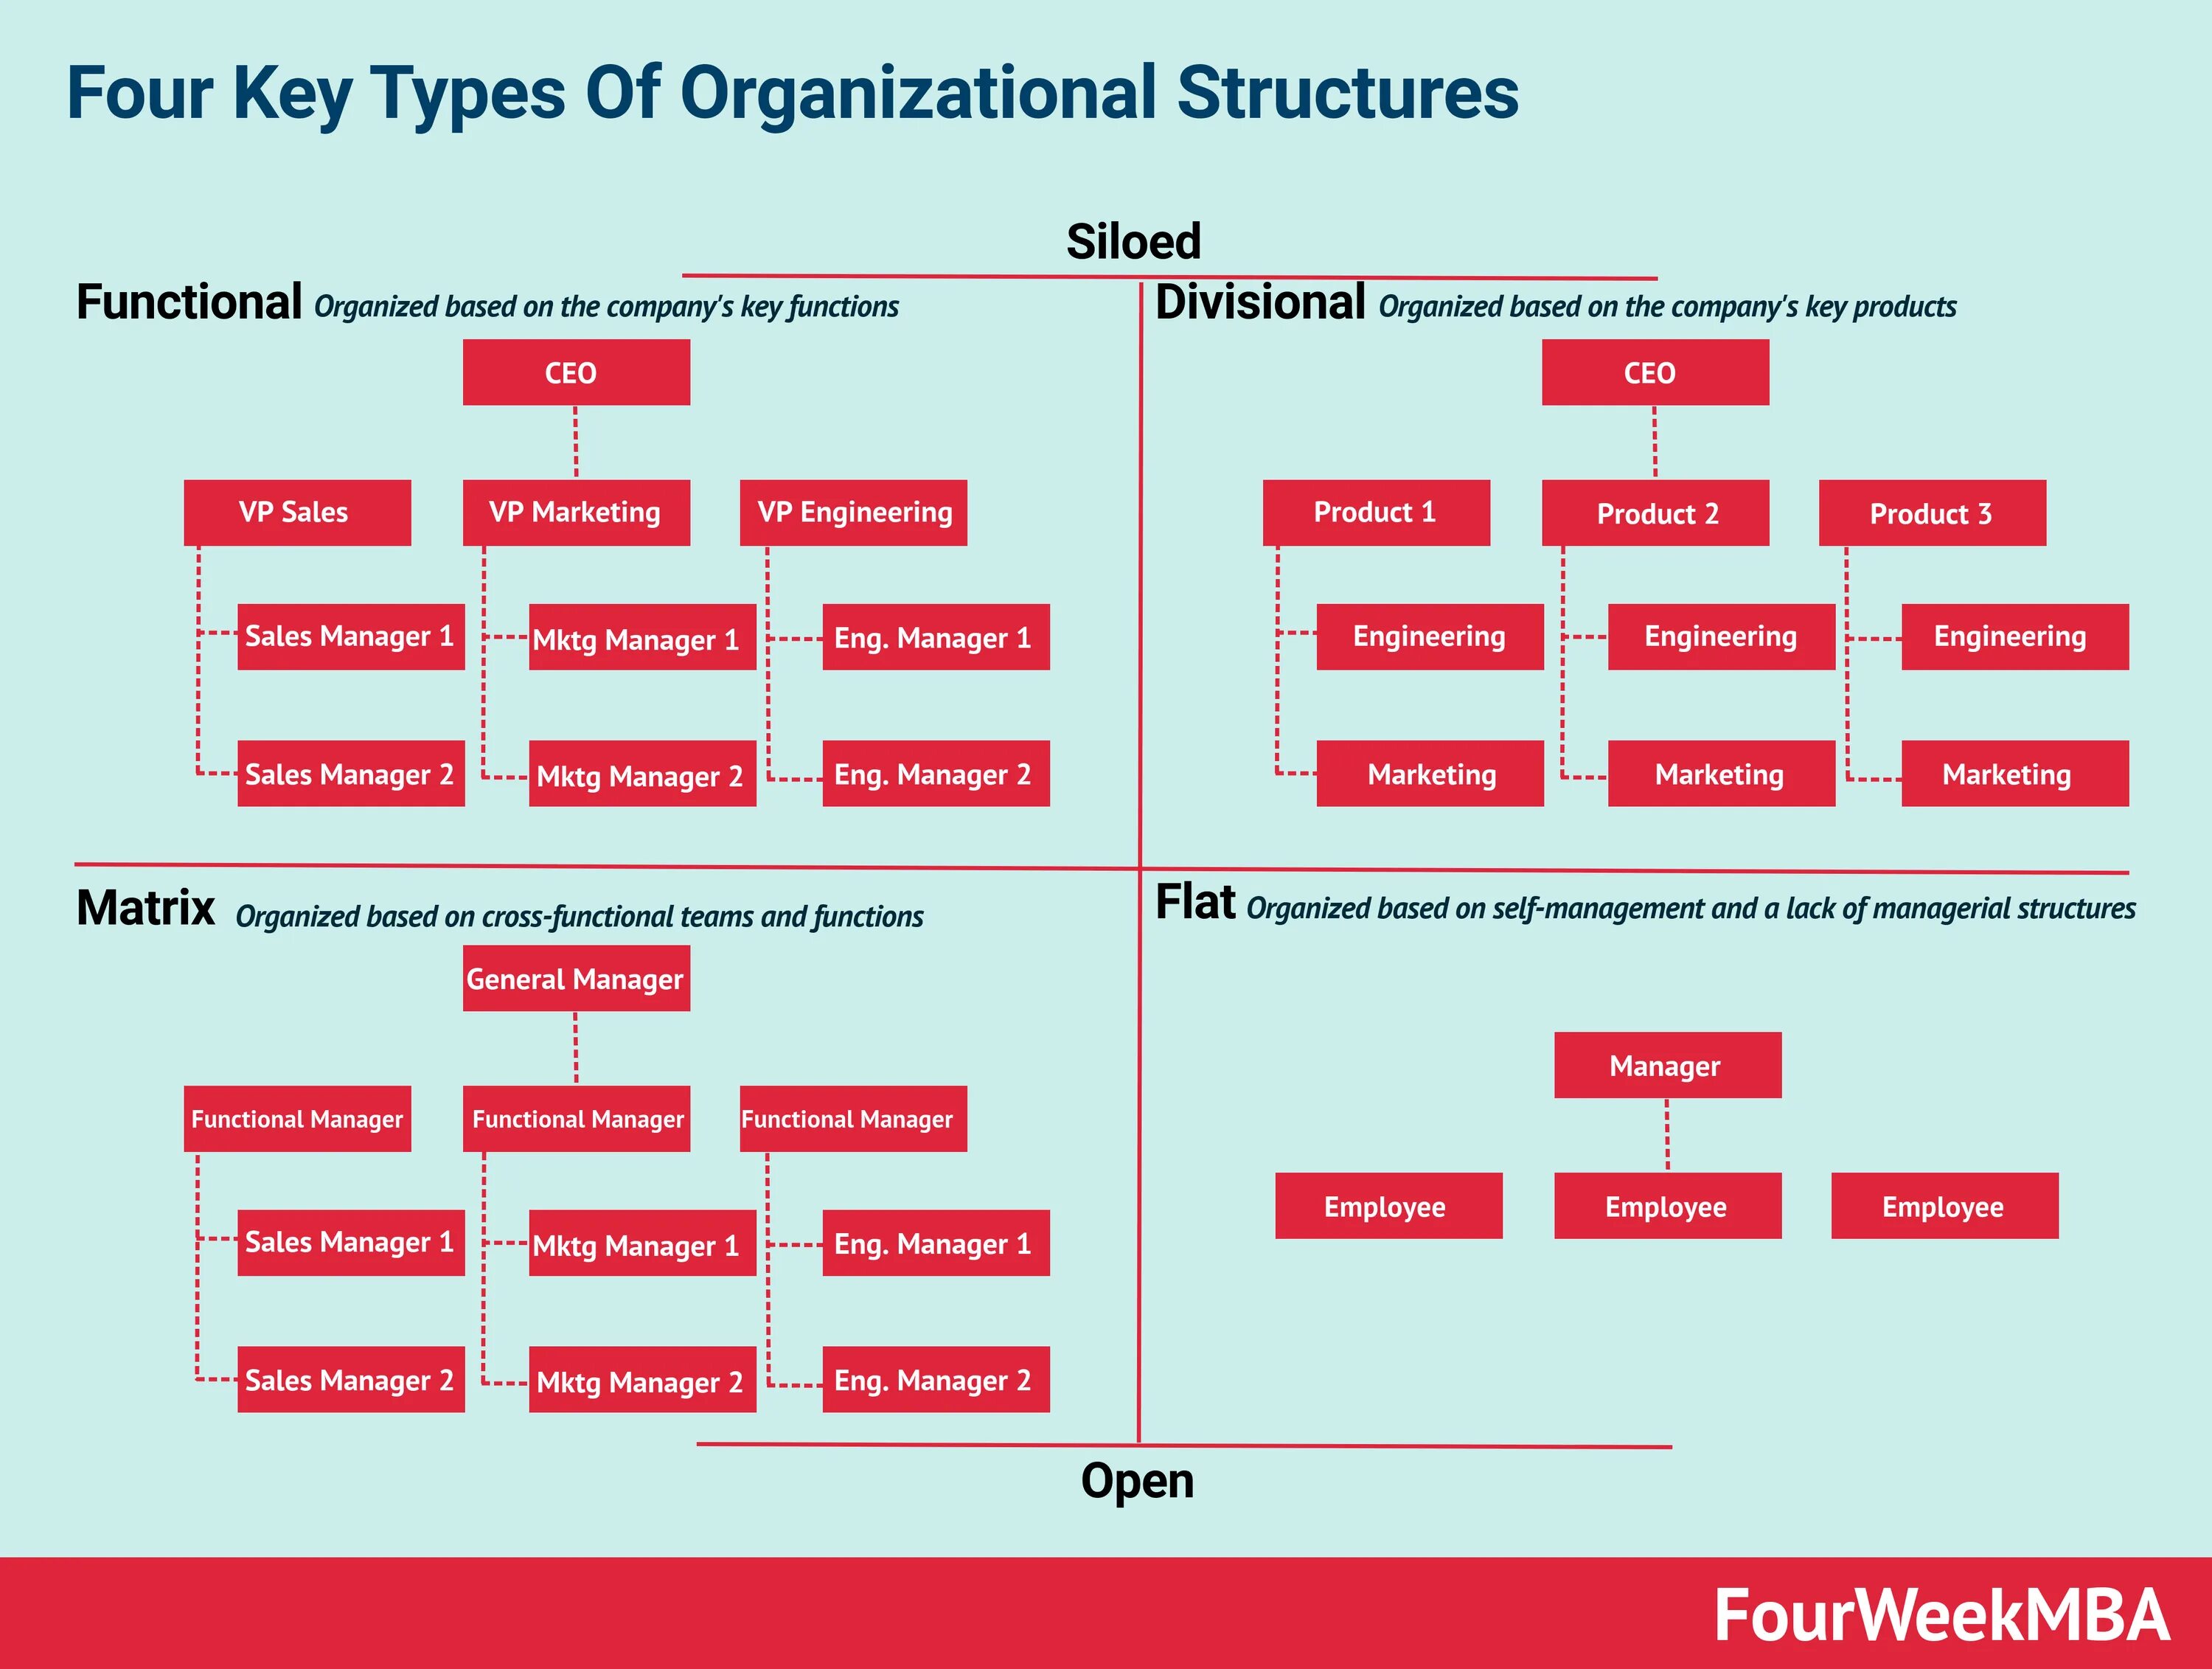 Type randomstring type. Nike Matrix structure. Nike Organization structure Chart. Организационная структура компании Nike. Организационная структура компании Nike схема.